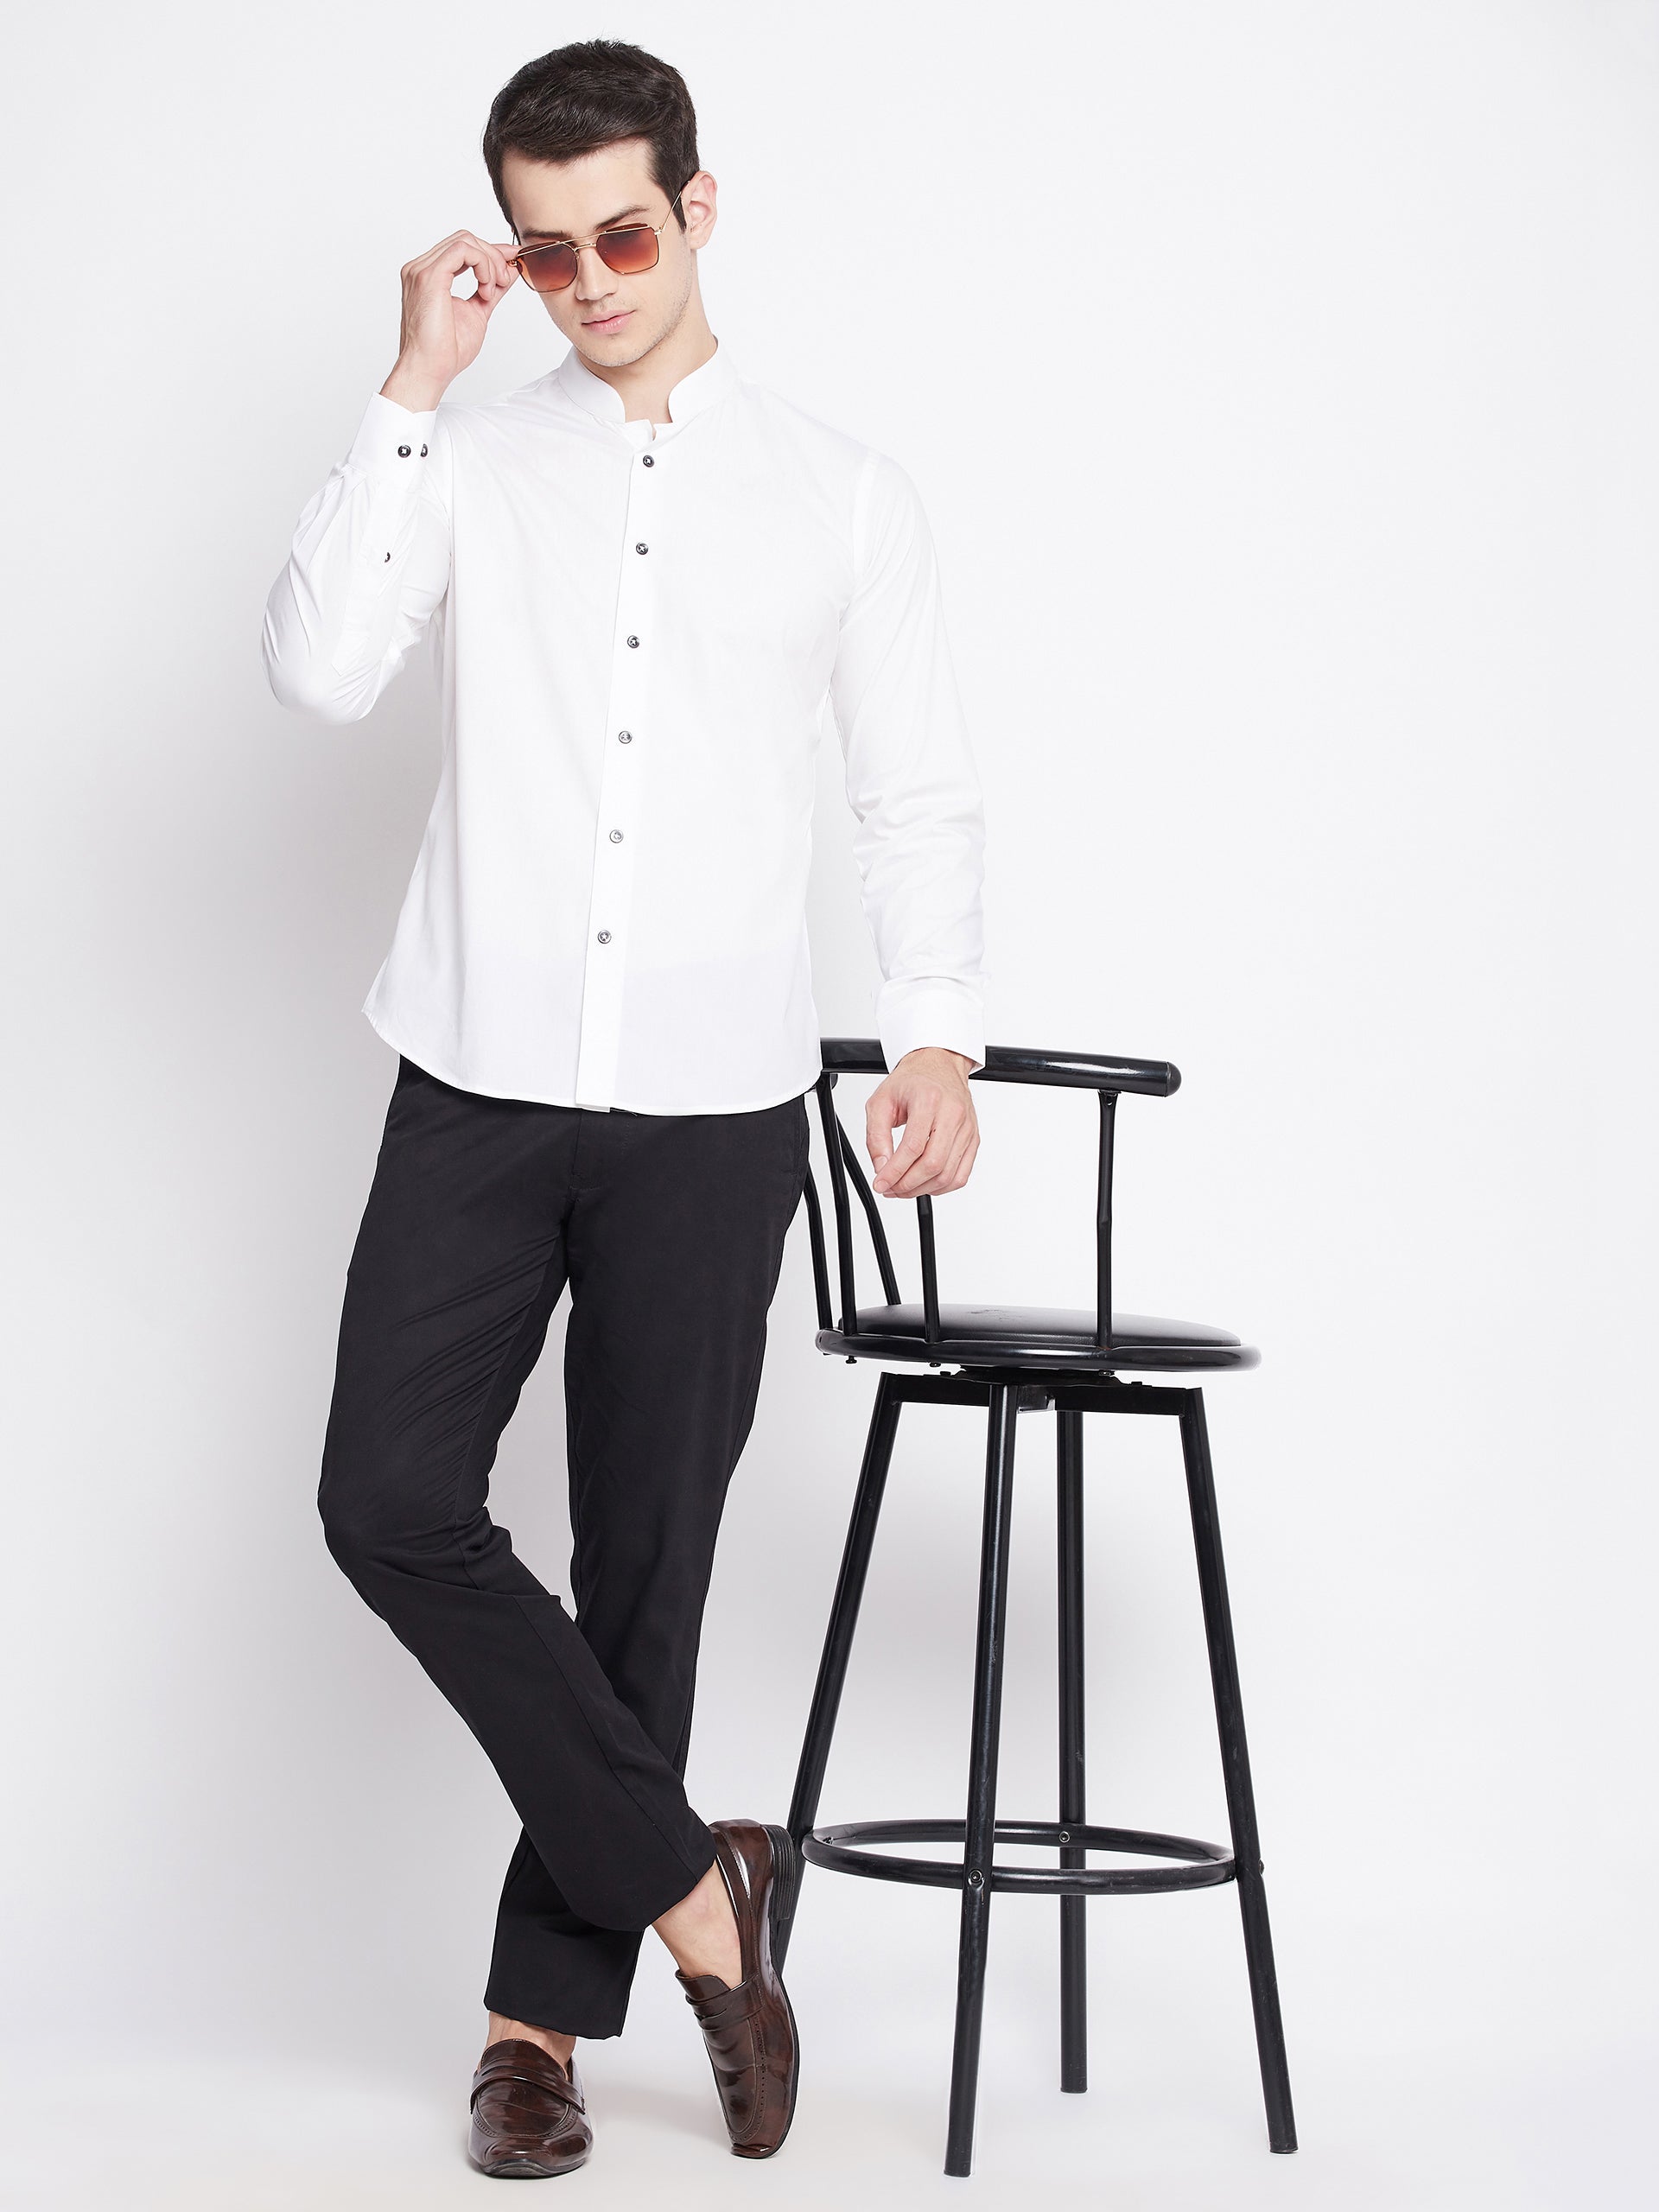 Pearl White Satin Cotton Shirt with Mandarin Collar